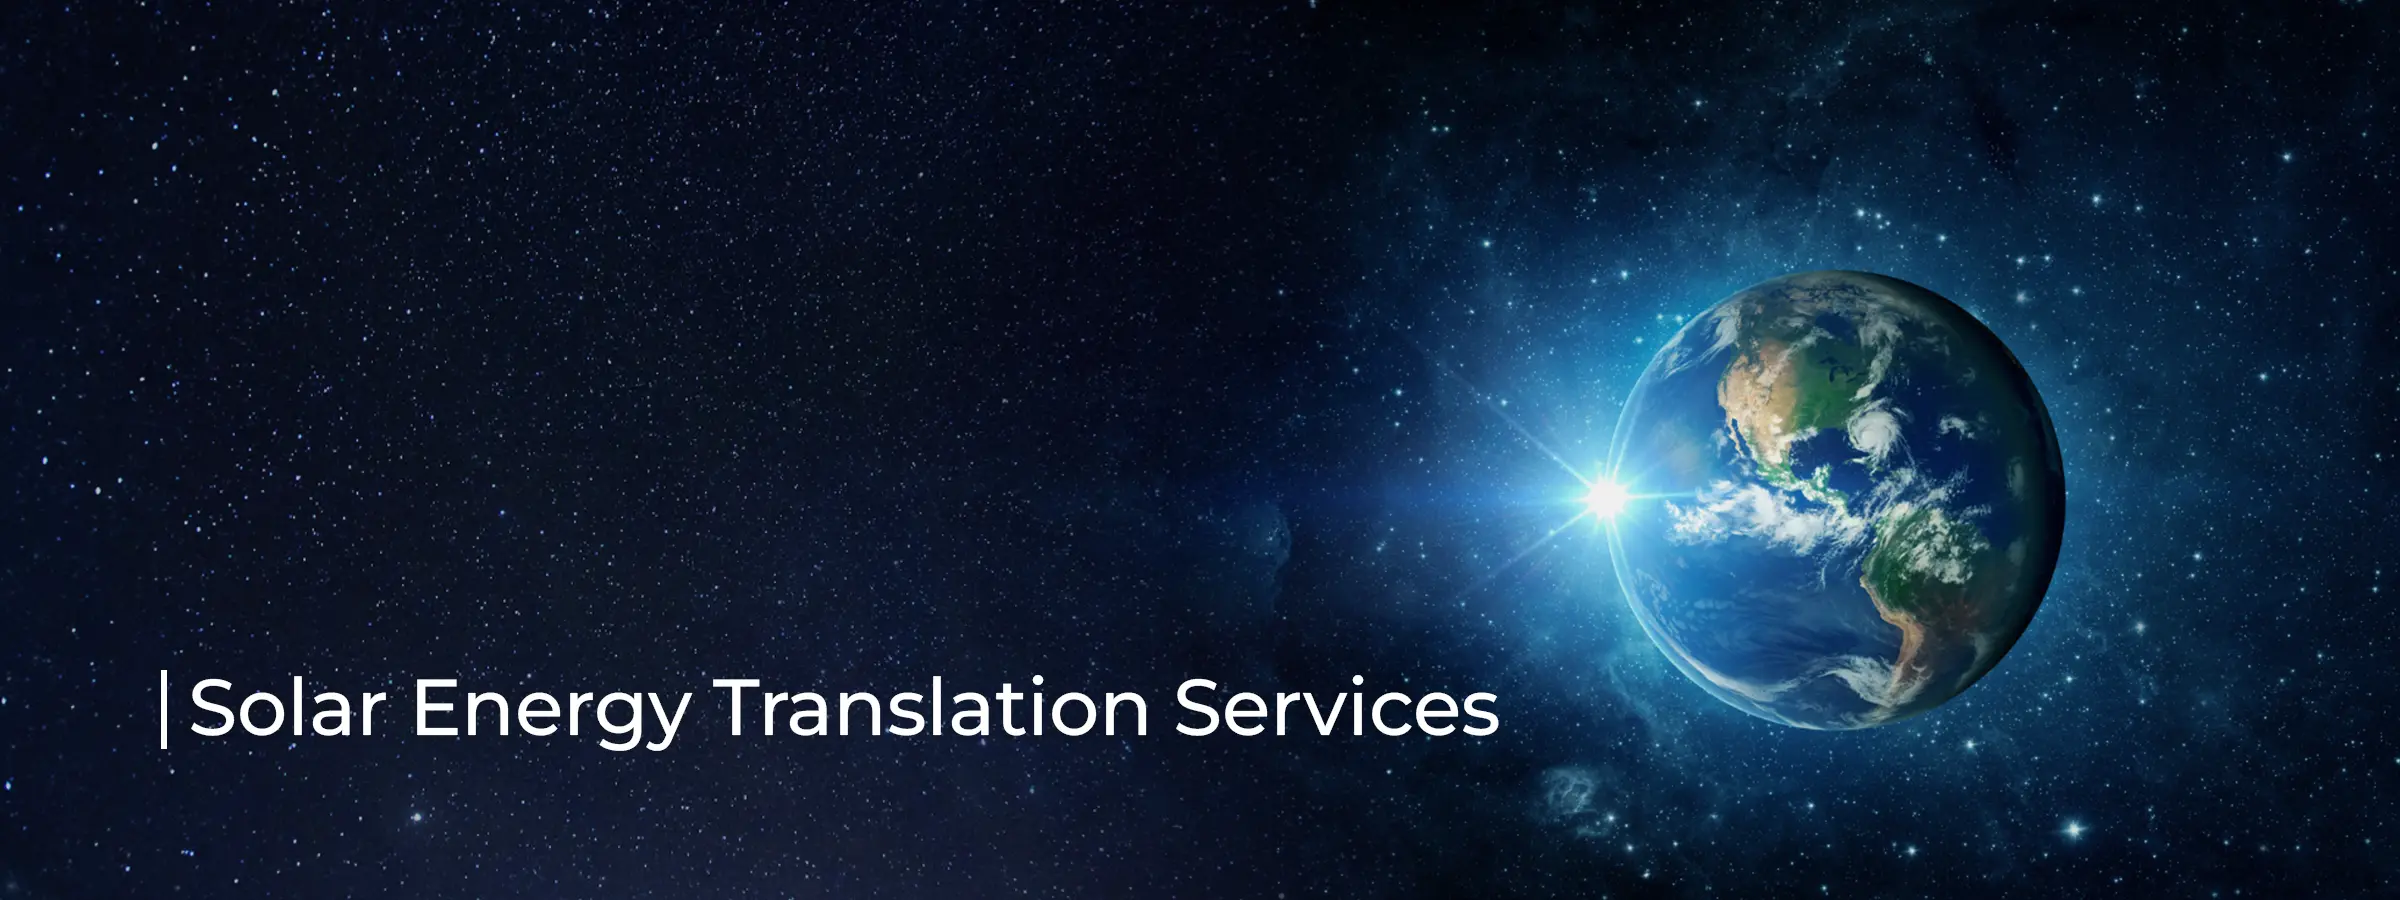 solar-energy-translation-service-industry-banner